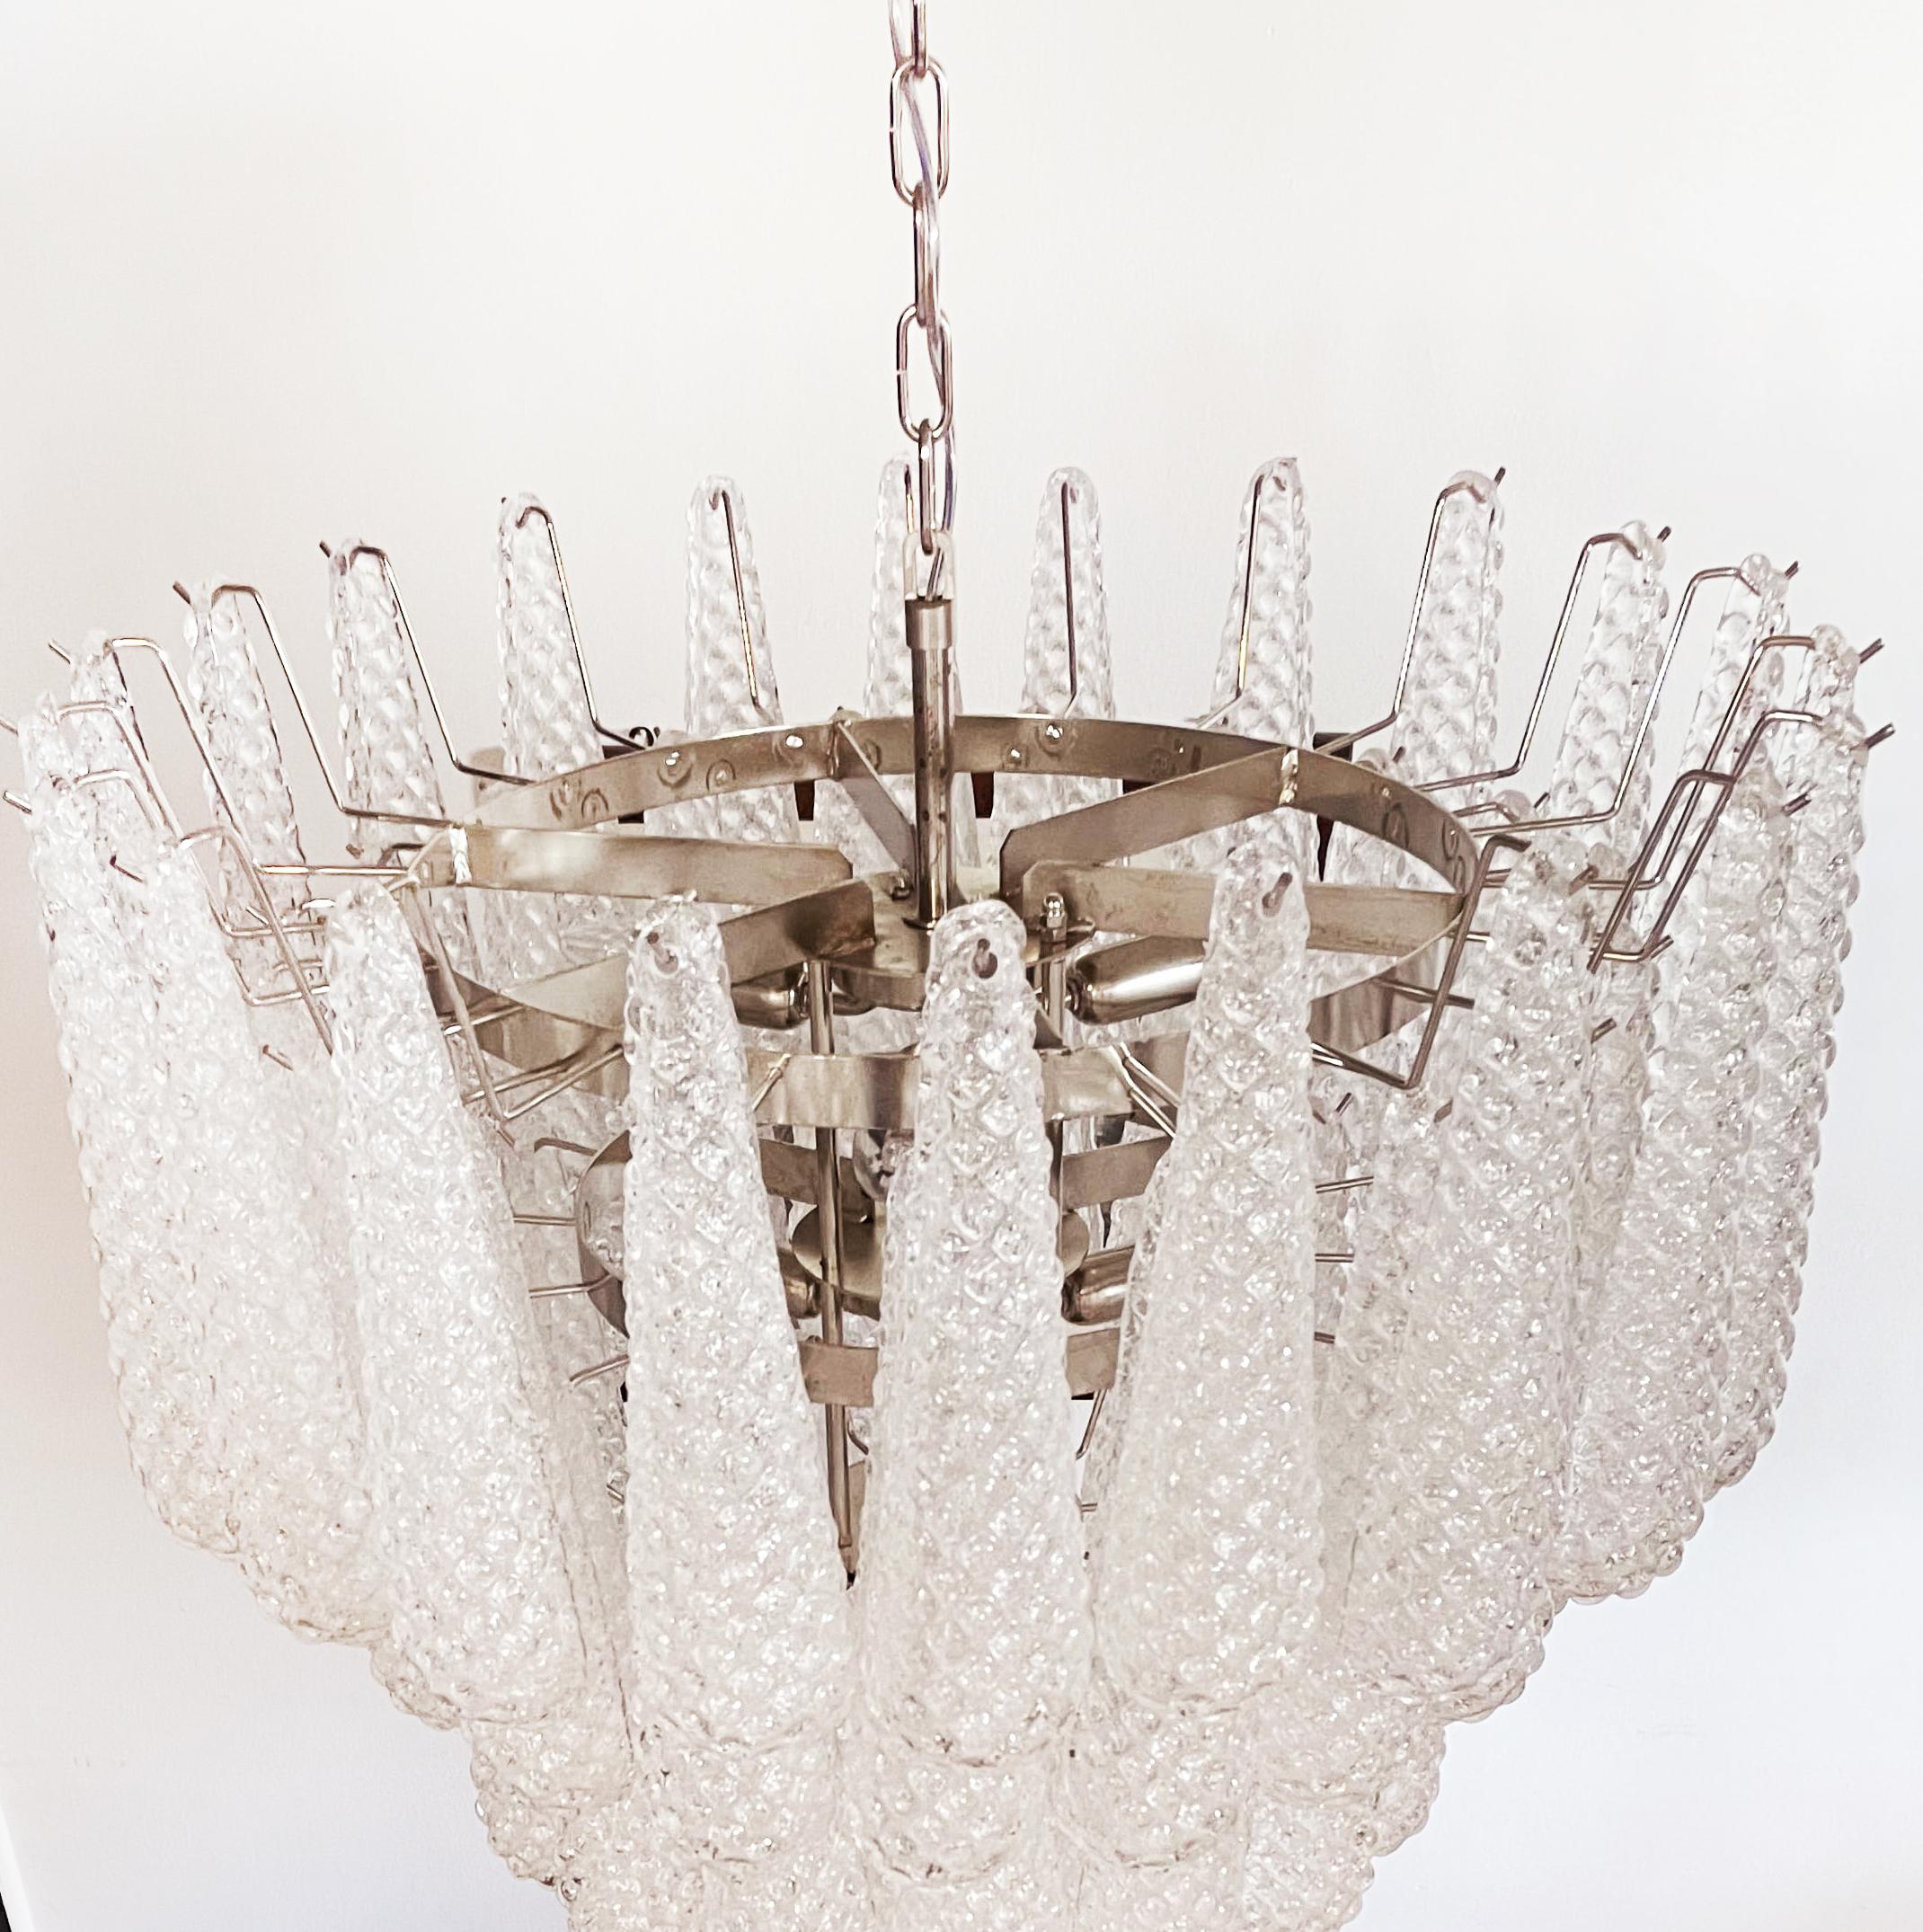 Magnificent Italian vintage Murano glass chandeliers - 75 glass petals drop For Sale 3